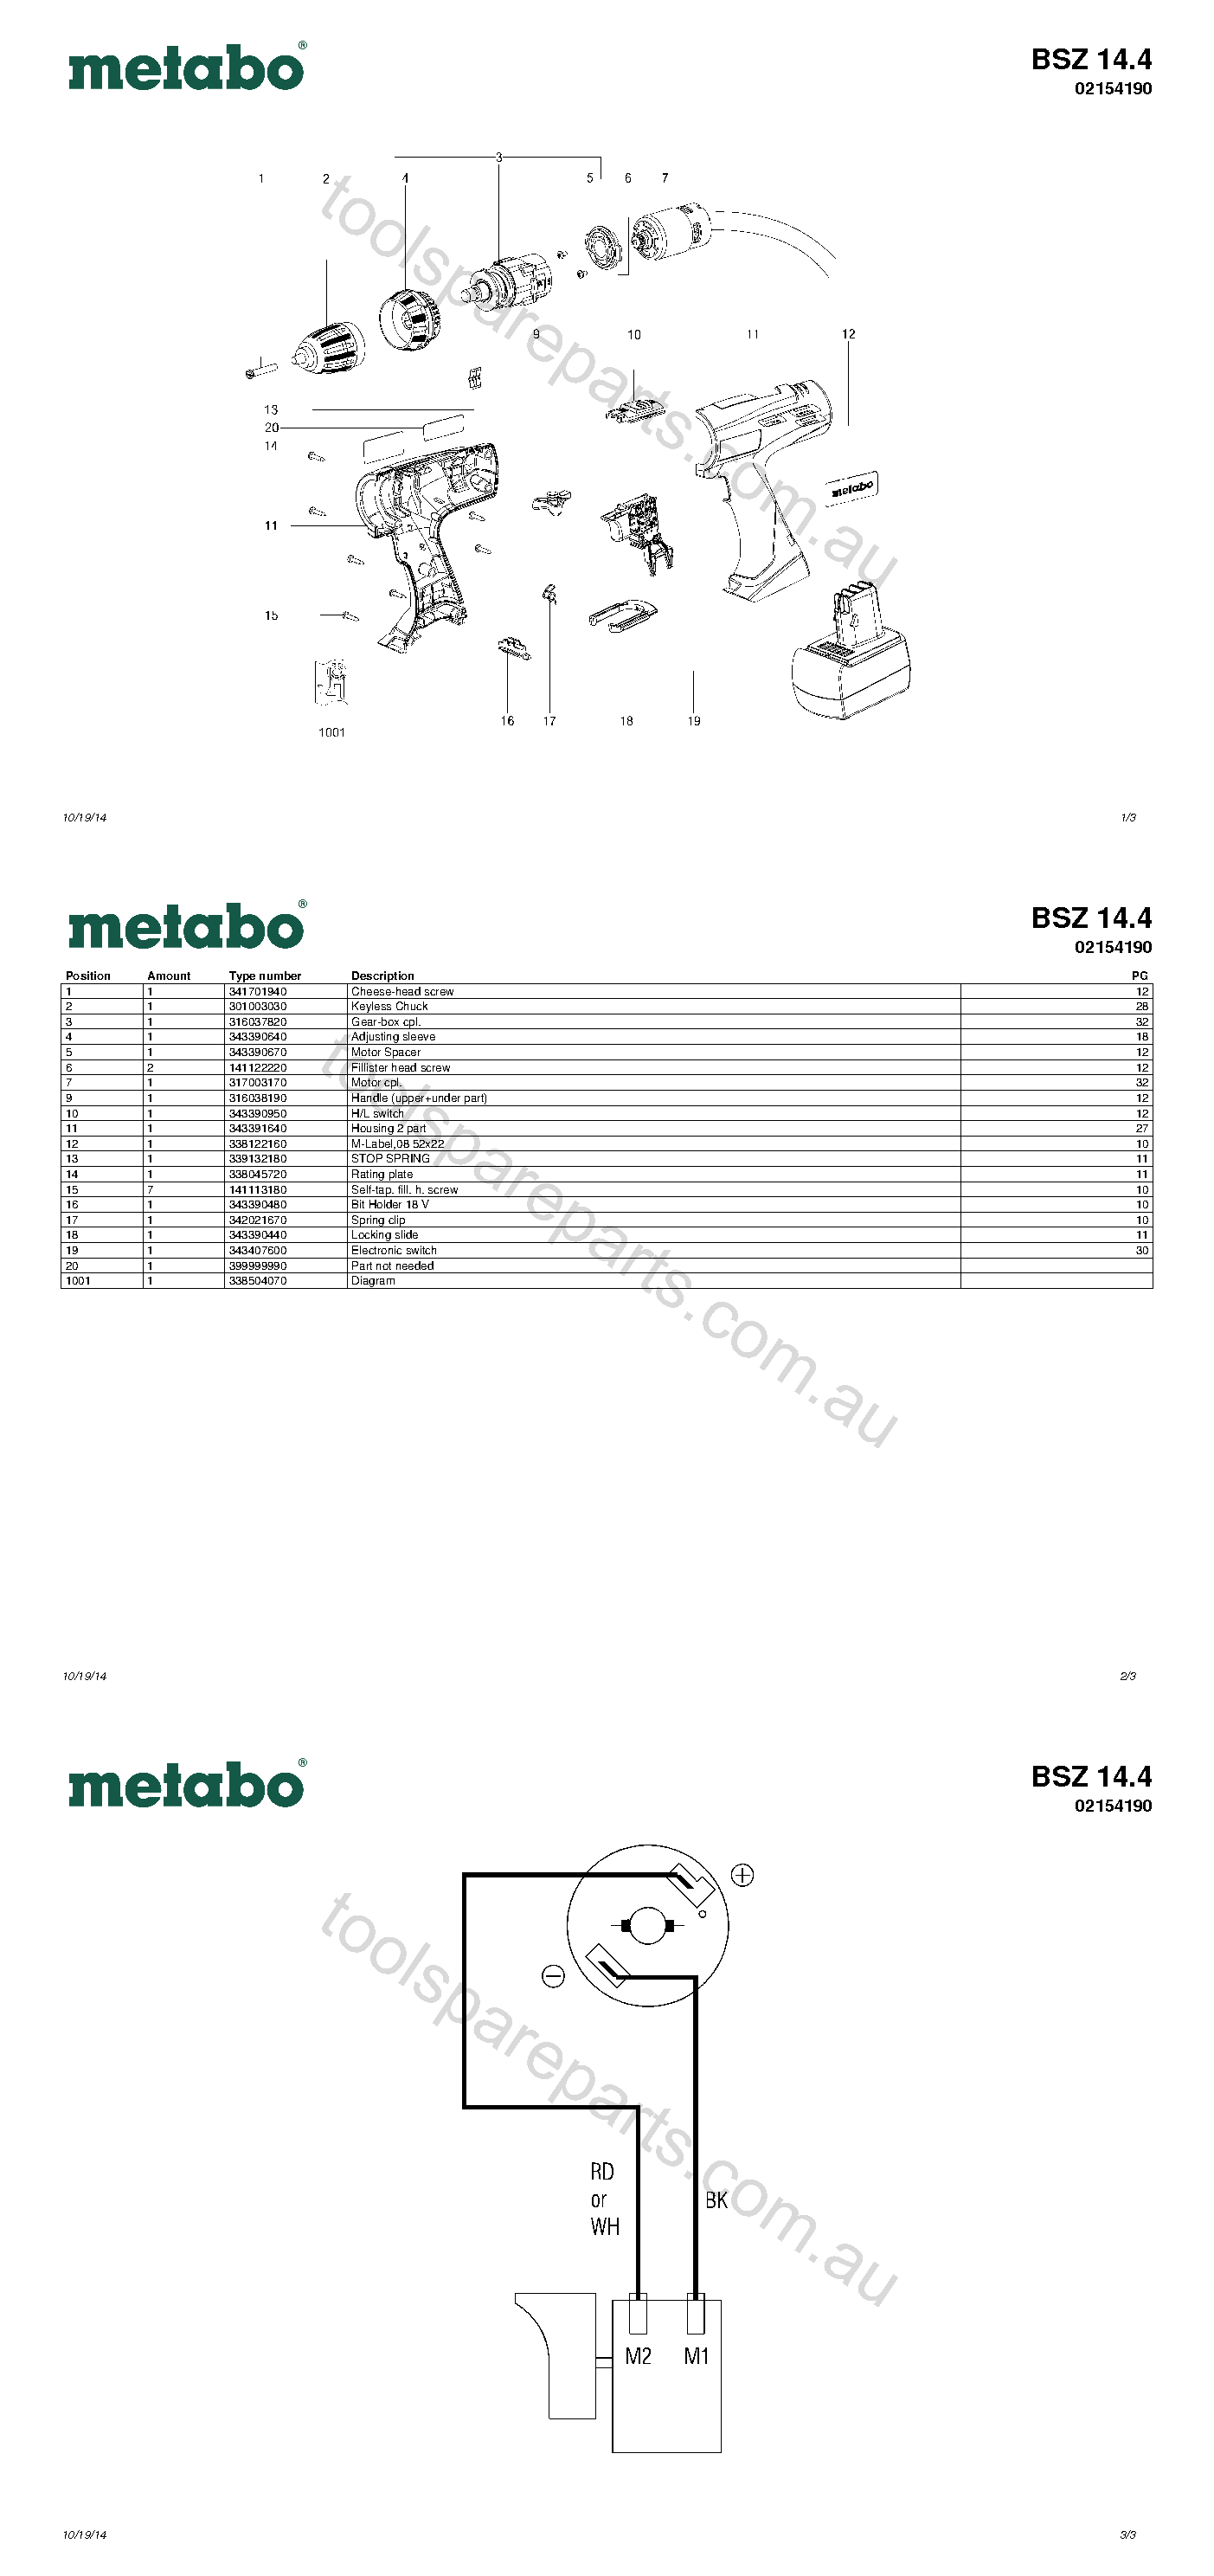 Metabo BSZ 14.4 02154190  Diagram 1